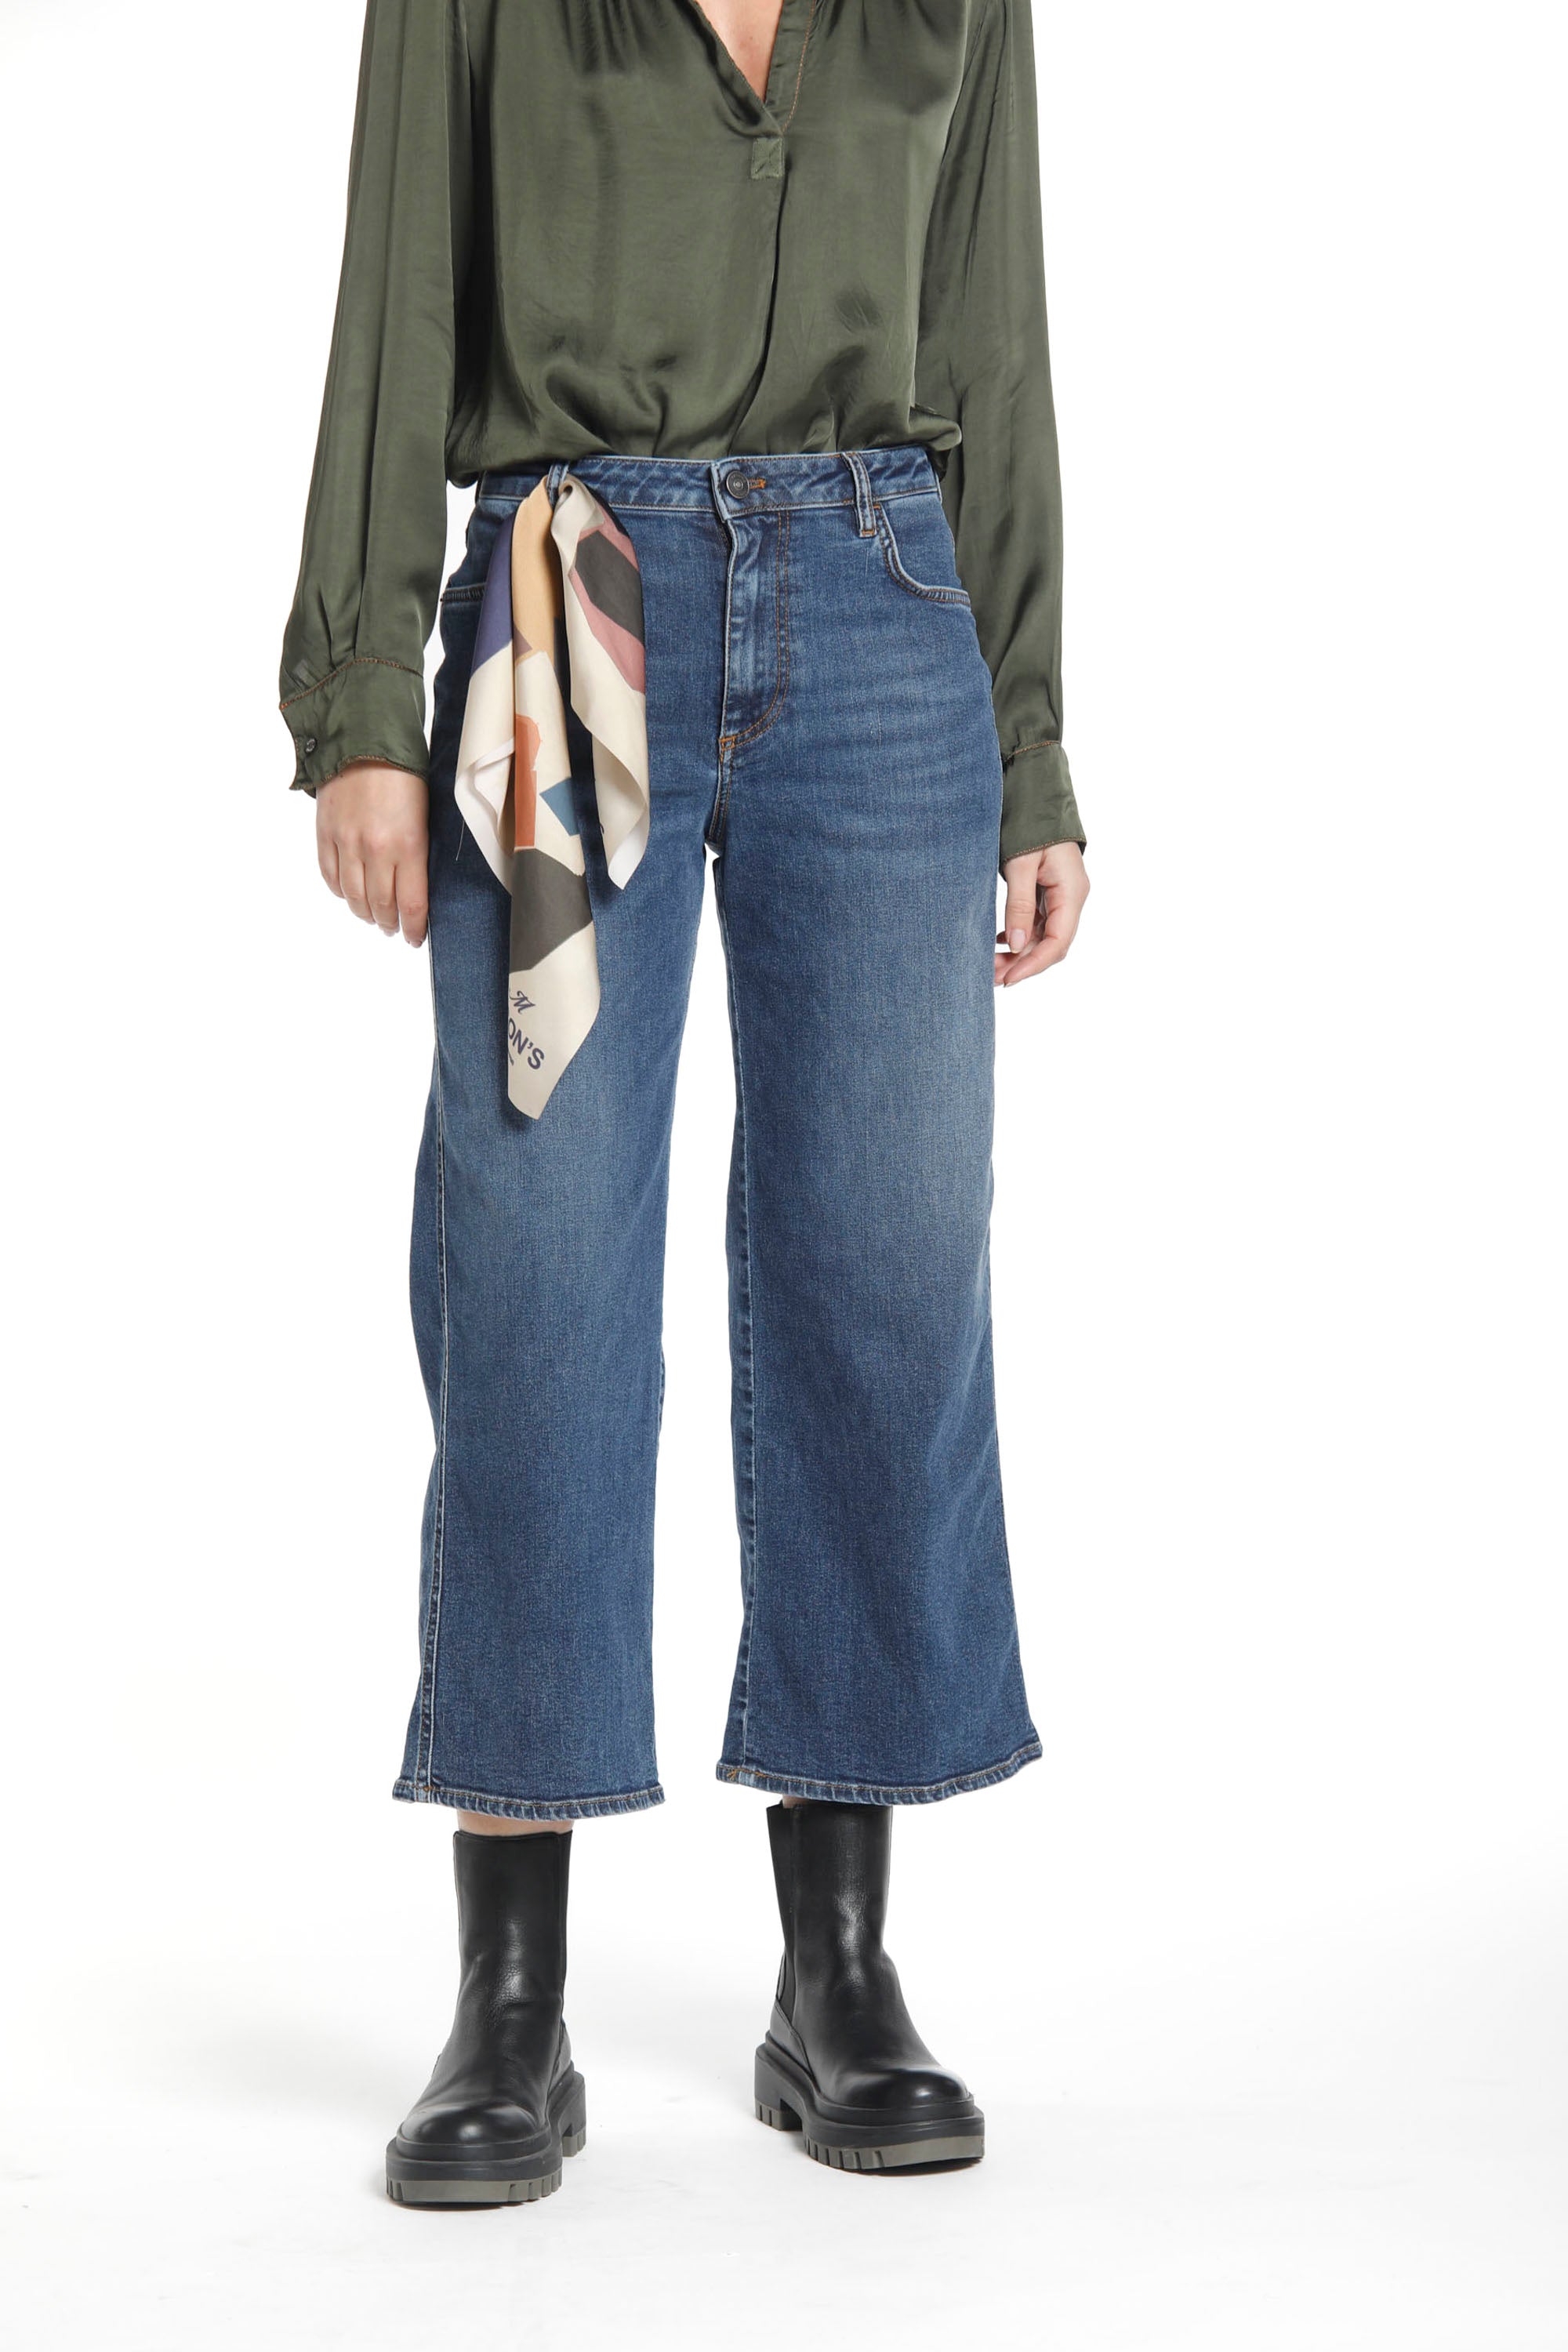 Image 1 of woman's 5-pocket pants in stretch denim navy blue model Samantha by Mason's